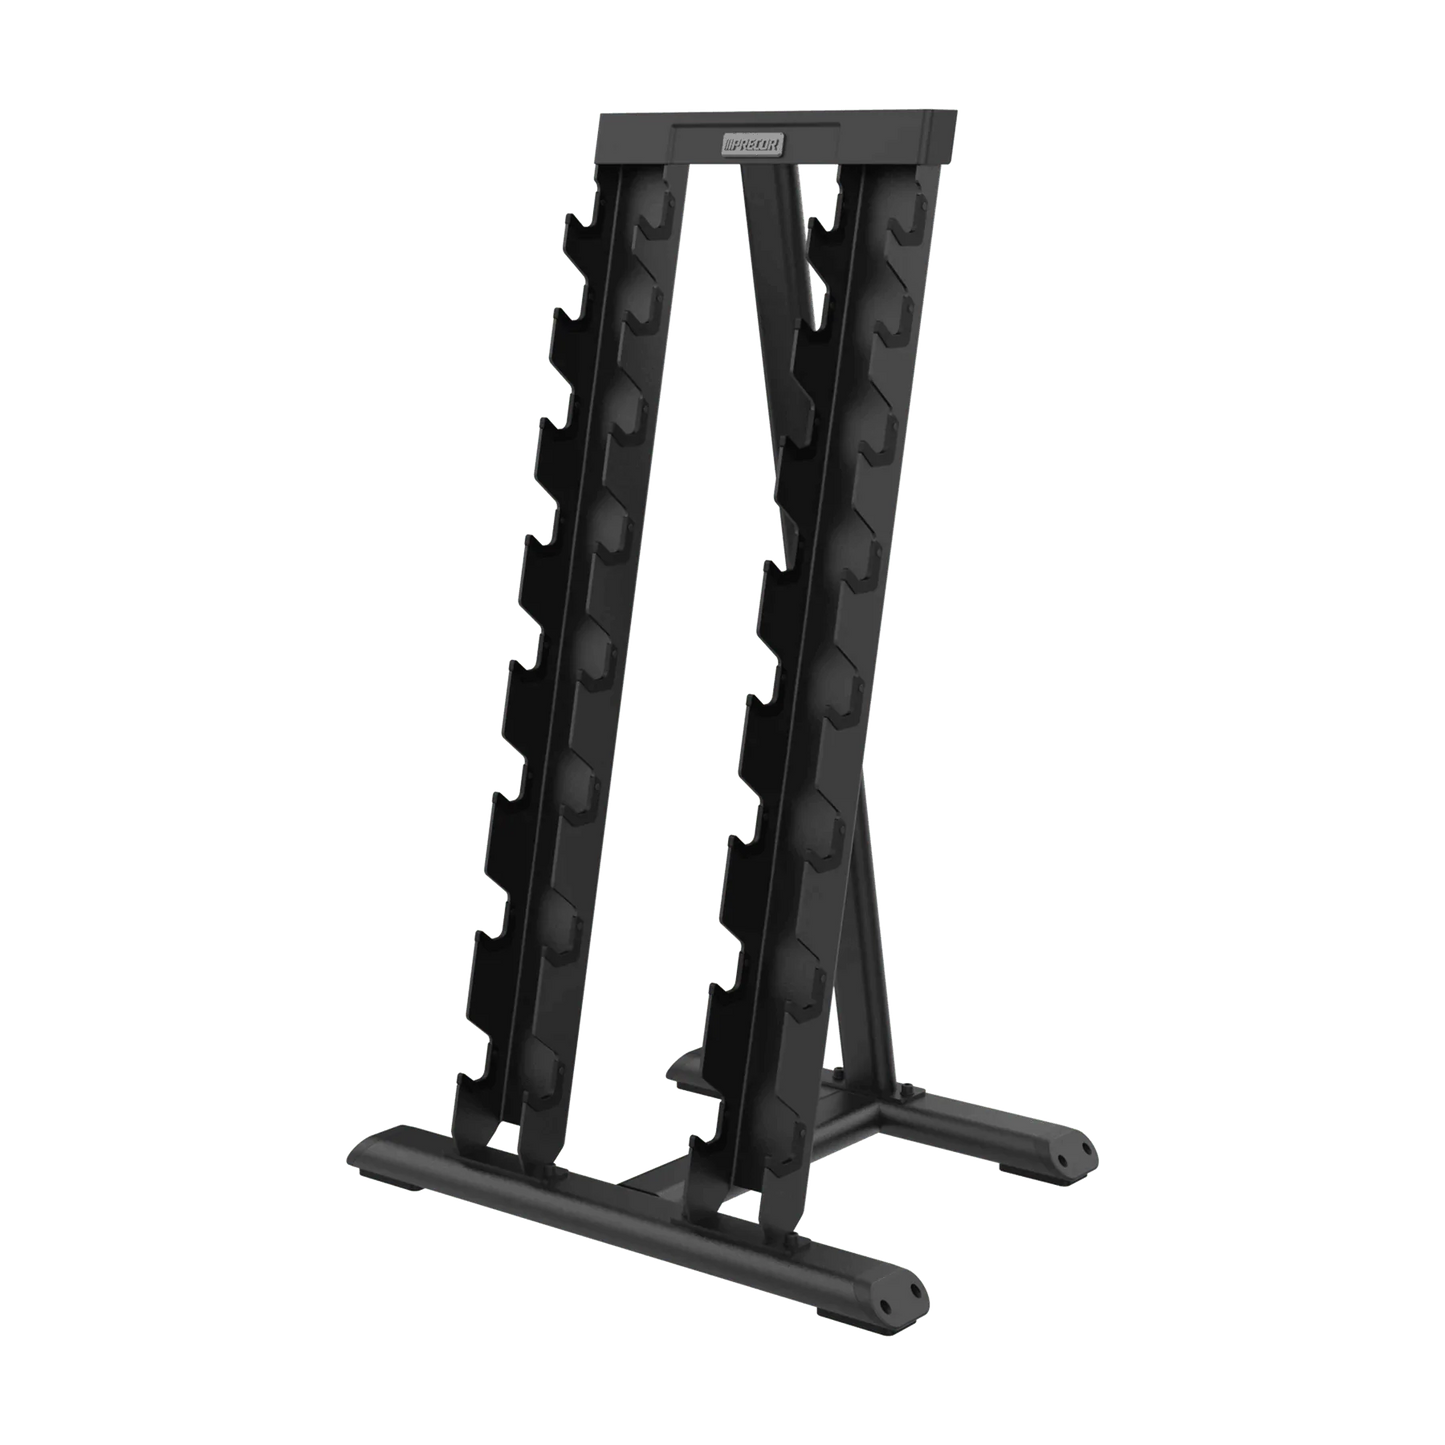 Precor Vitality Series Vertical Dumbbell Rack (VBR 6809) Weight Storage Precor 